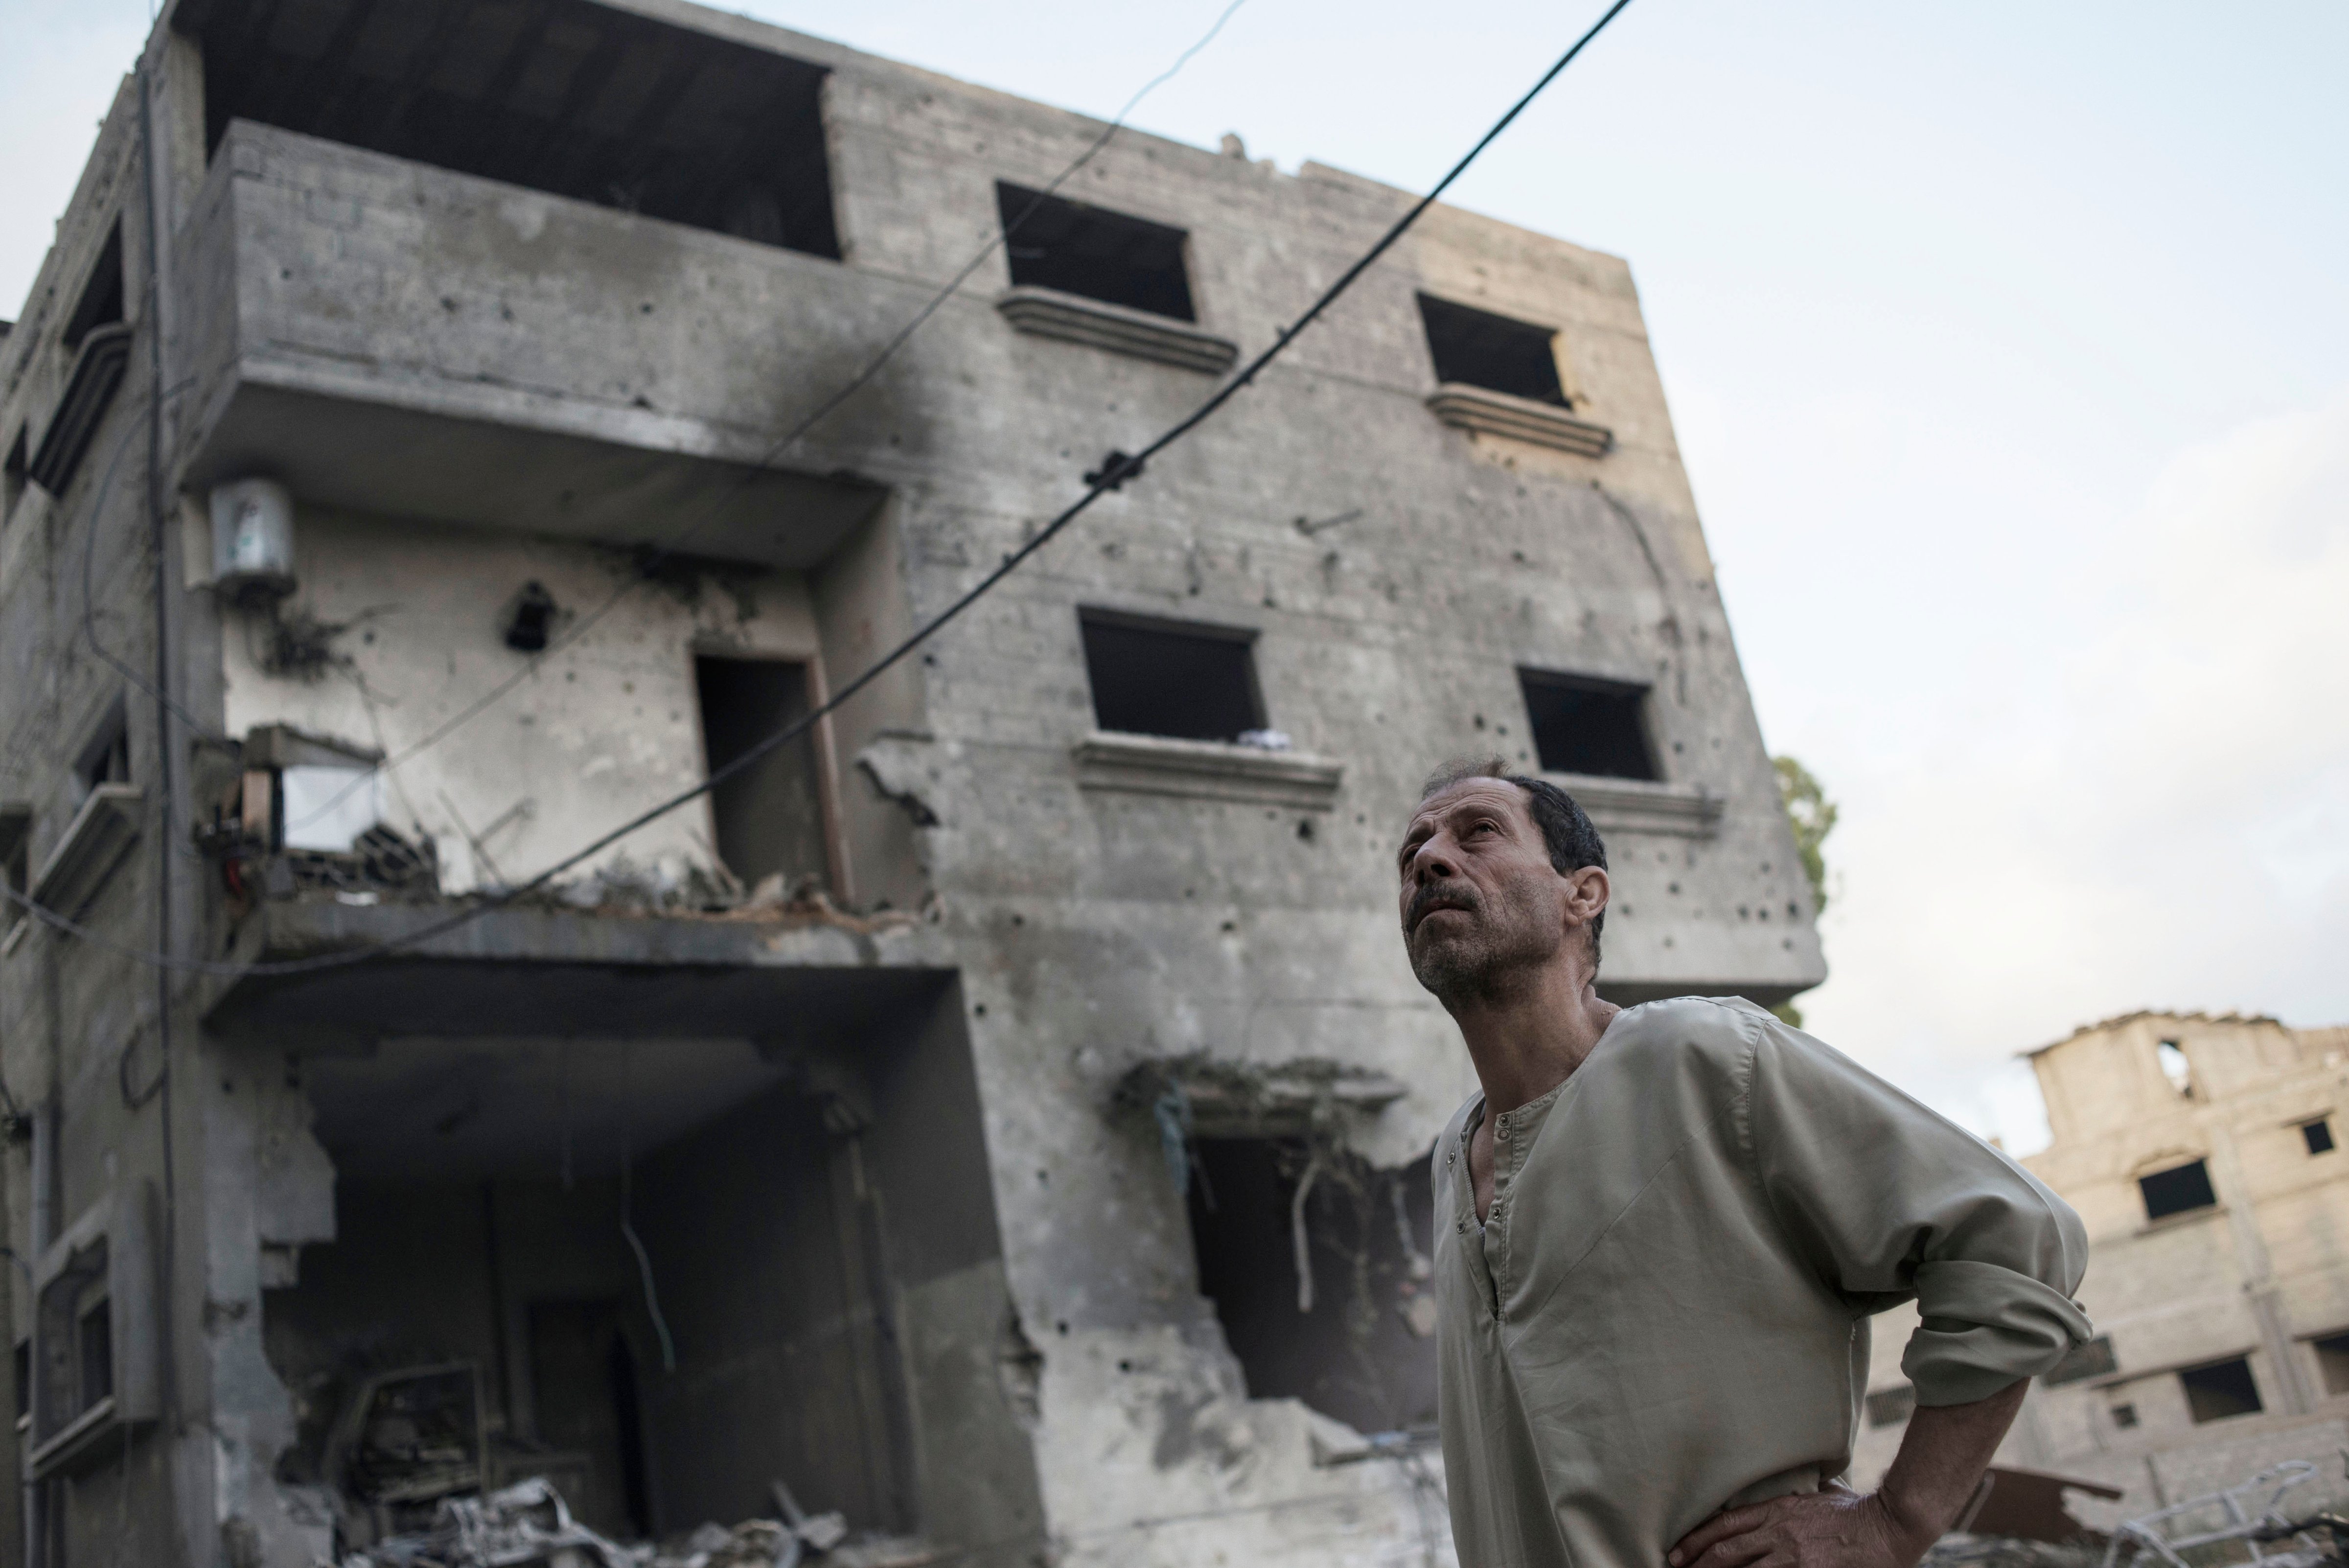 A Palestinian man stands near a damaged building in Gaza City, July 13, 2014. (Alessio Romenzi)